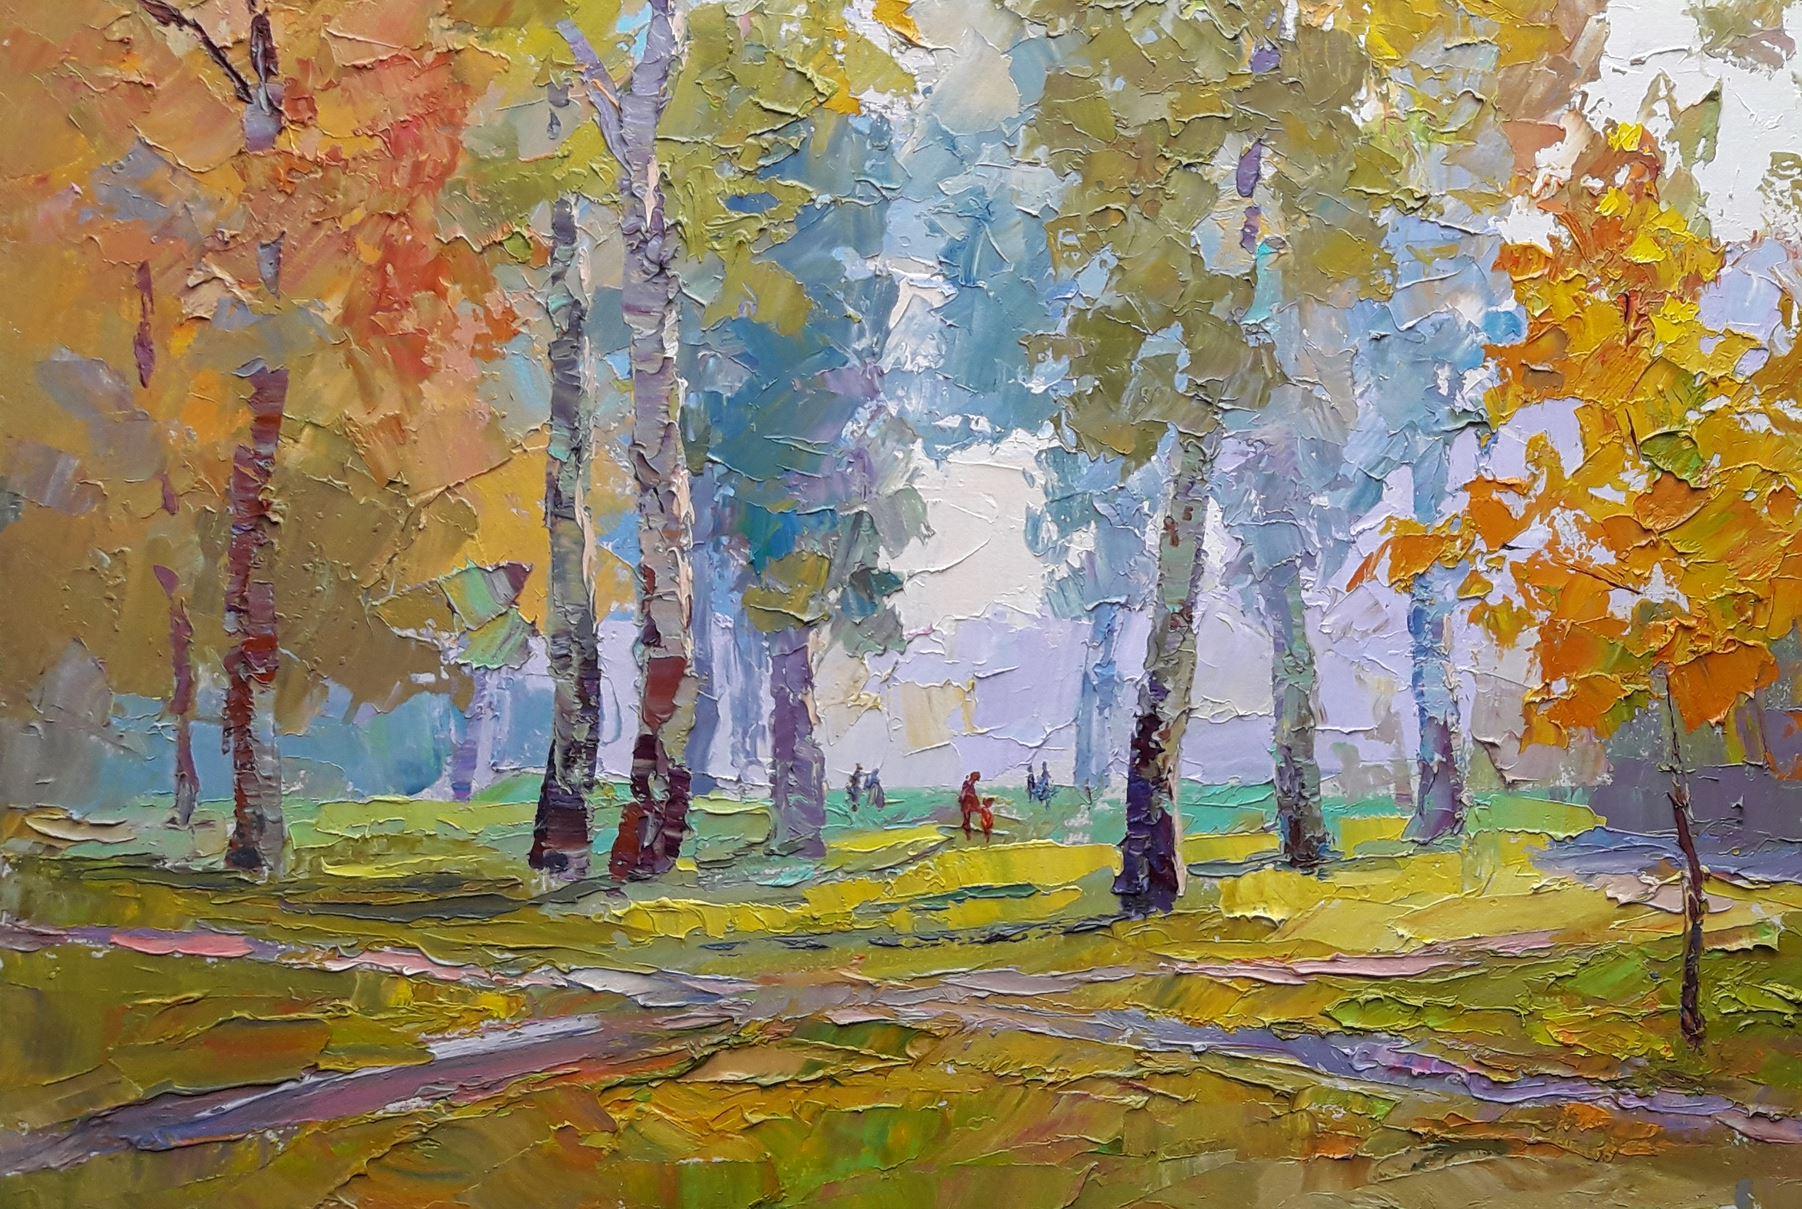 Artist: Boris Serdyuk 
Work: Original oil painting, handmade artwork, one of a kind 
Medium: Oil on Canvas
Style: Impressionism
Year: 2020
Title: Autumn park
Size: 19.5